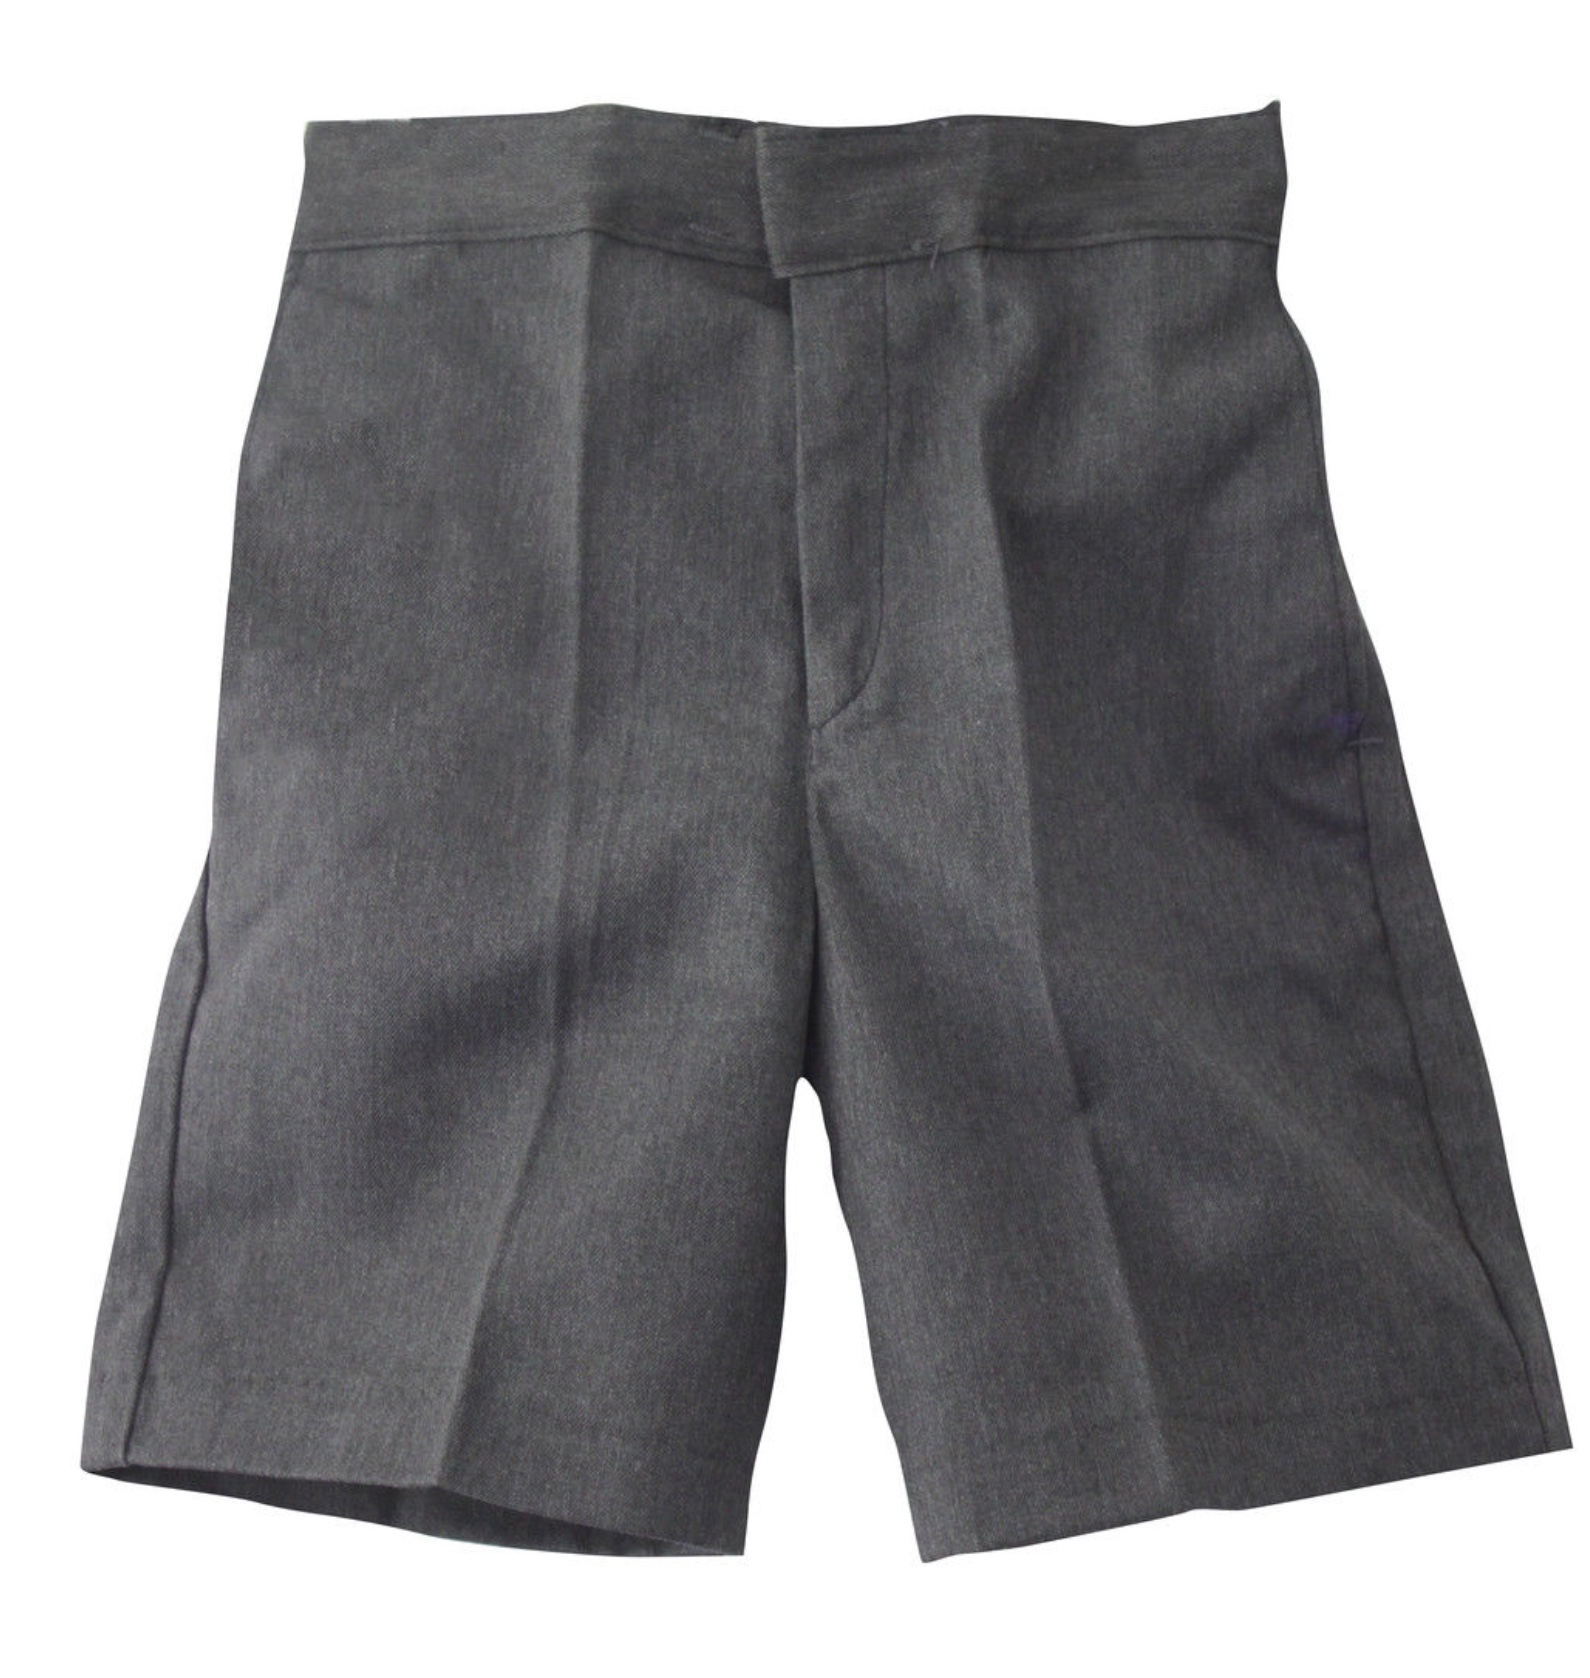 Boys' Dark Grey Shorts, Flat Front, Adjustable Waist, Zip Fly, Side and Back Pockets 6-7 Y